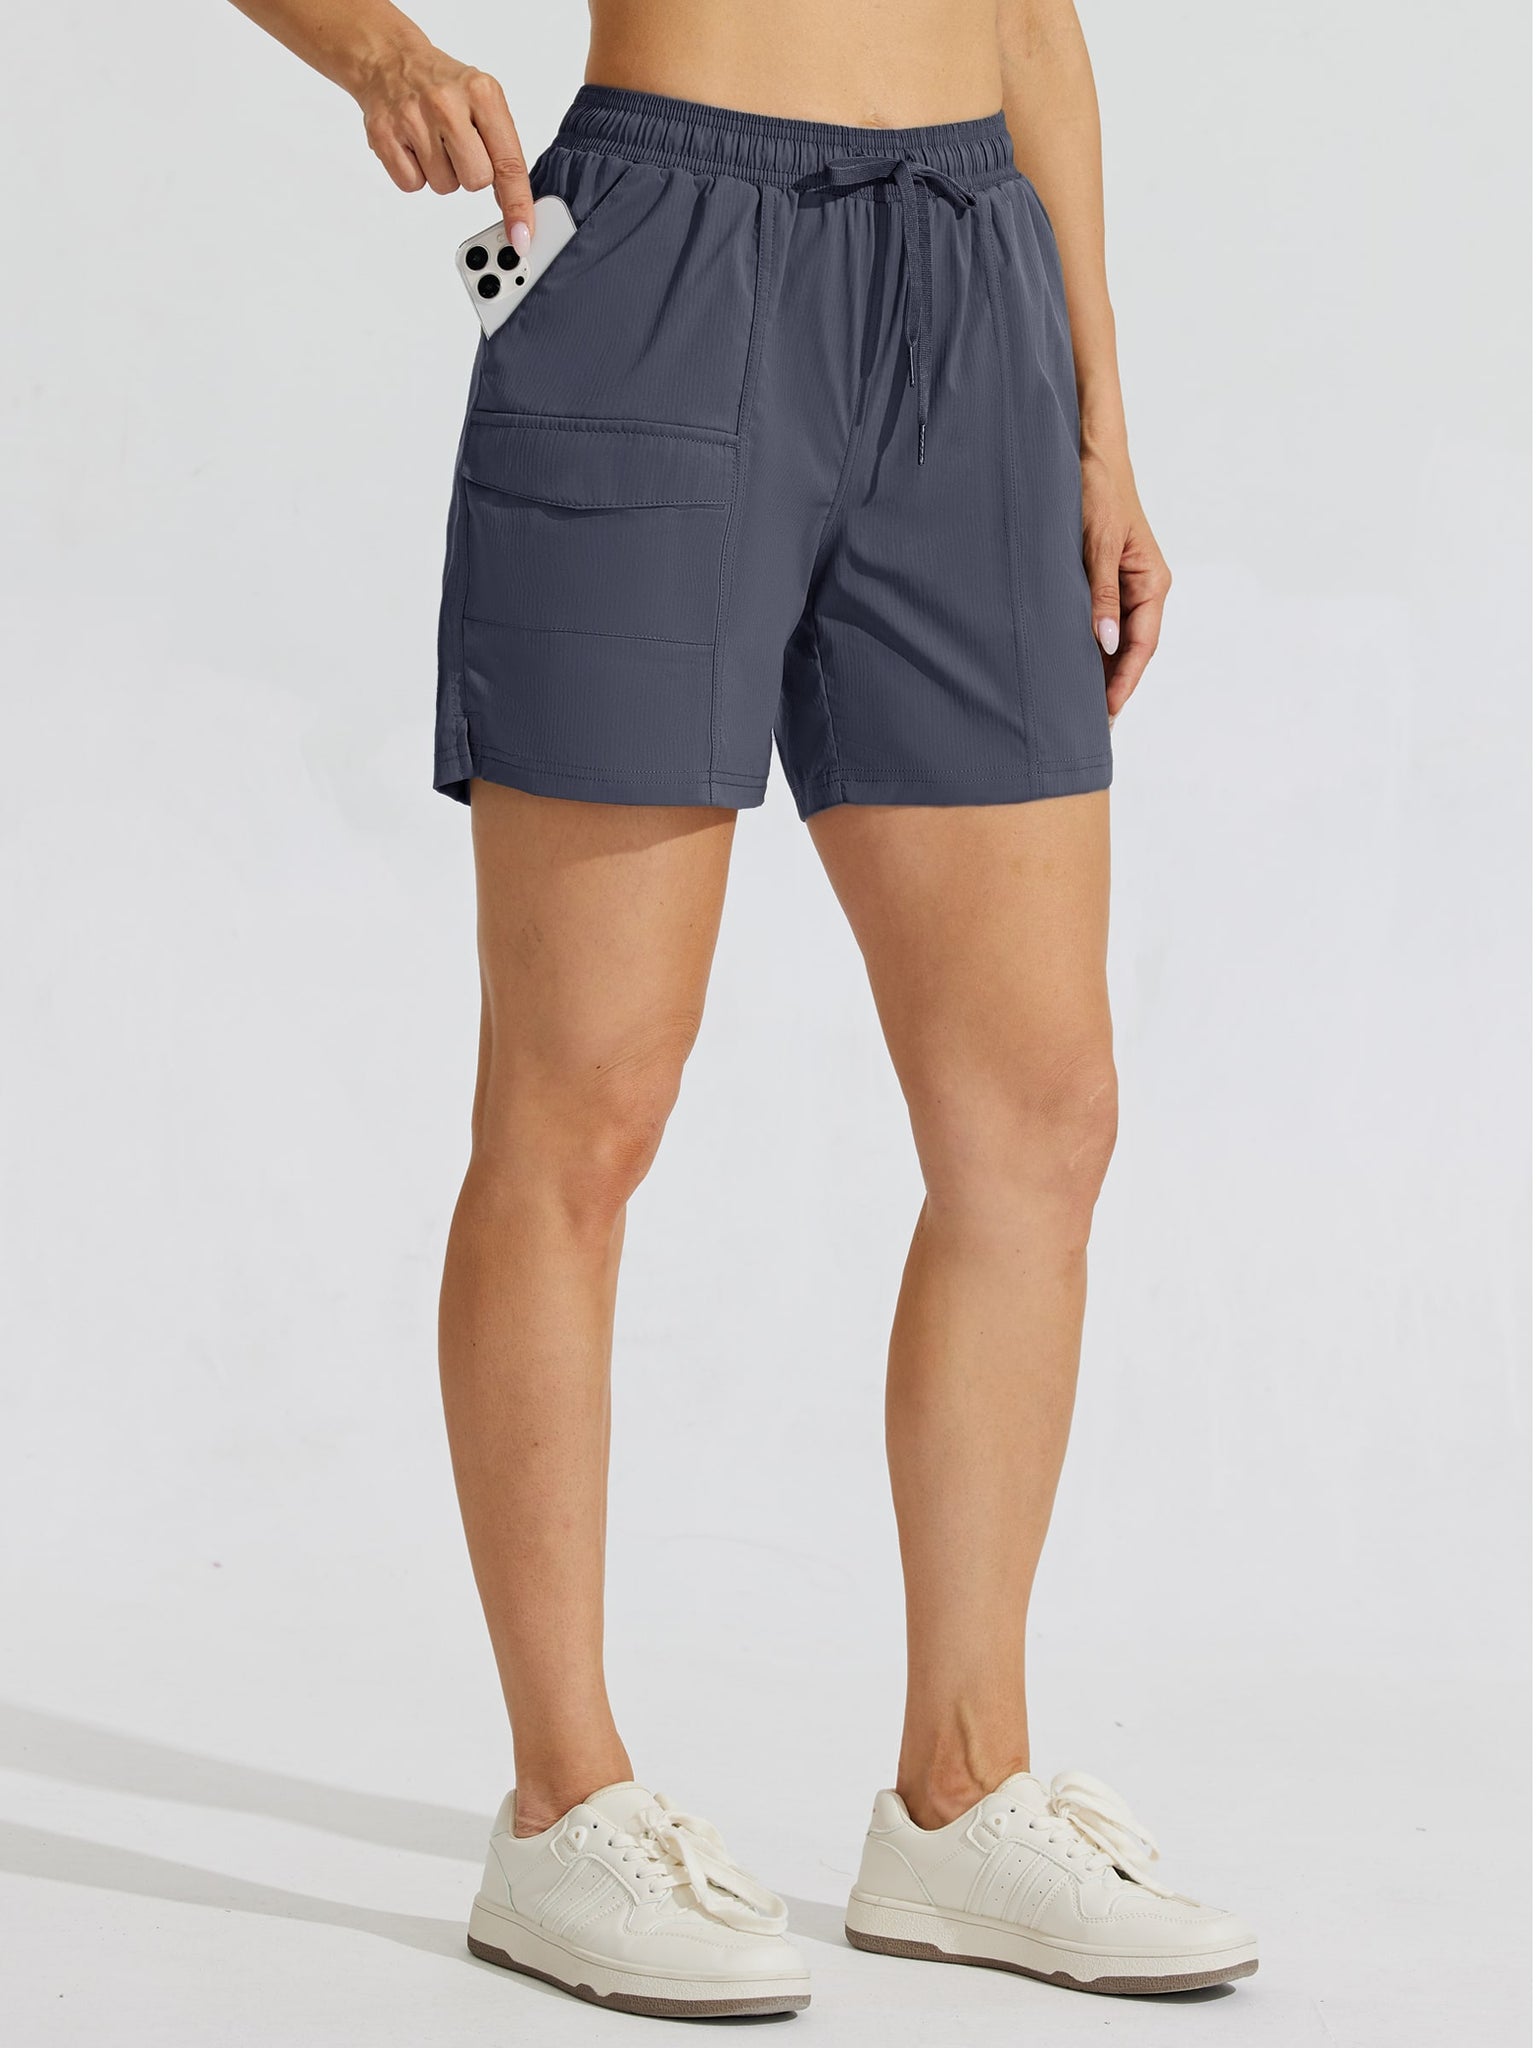 Women's Golf Athletic Shorts